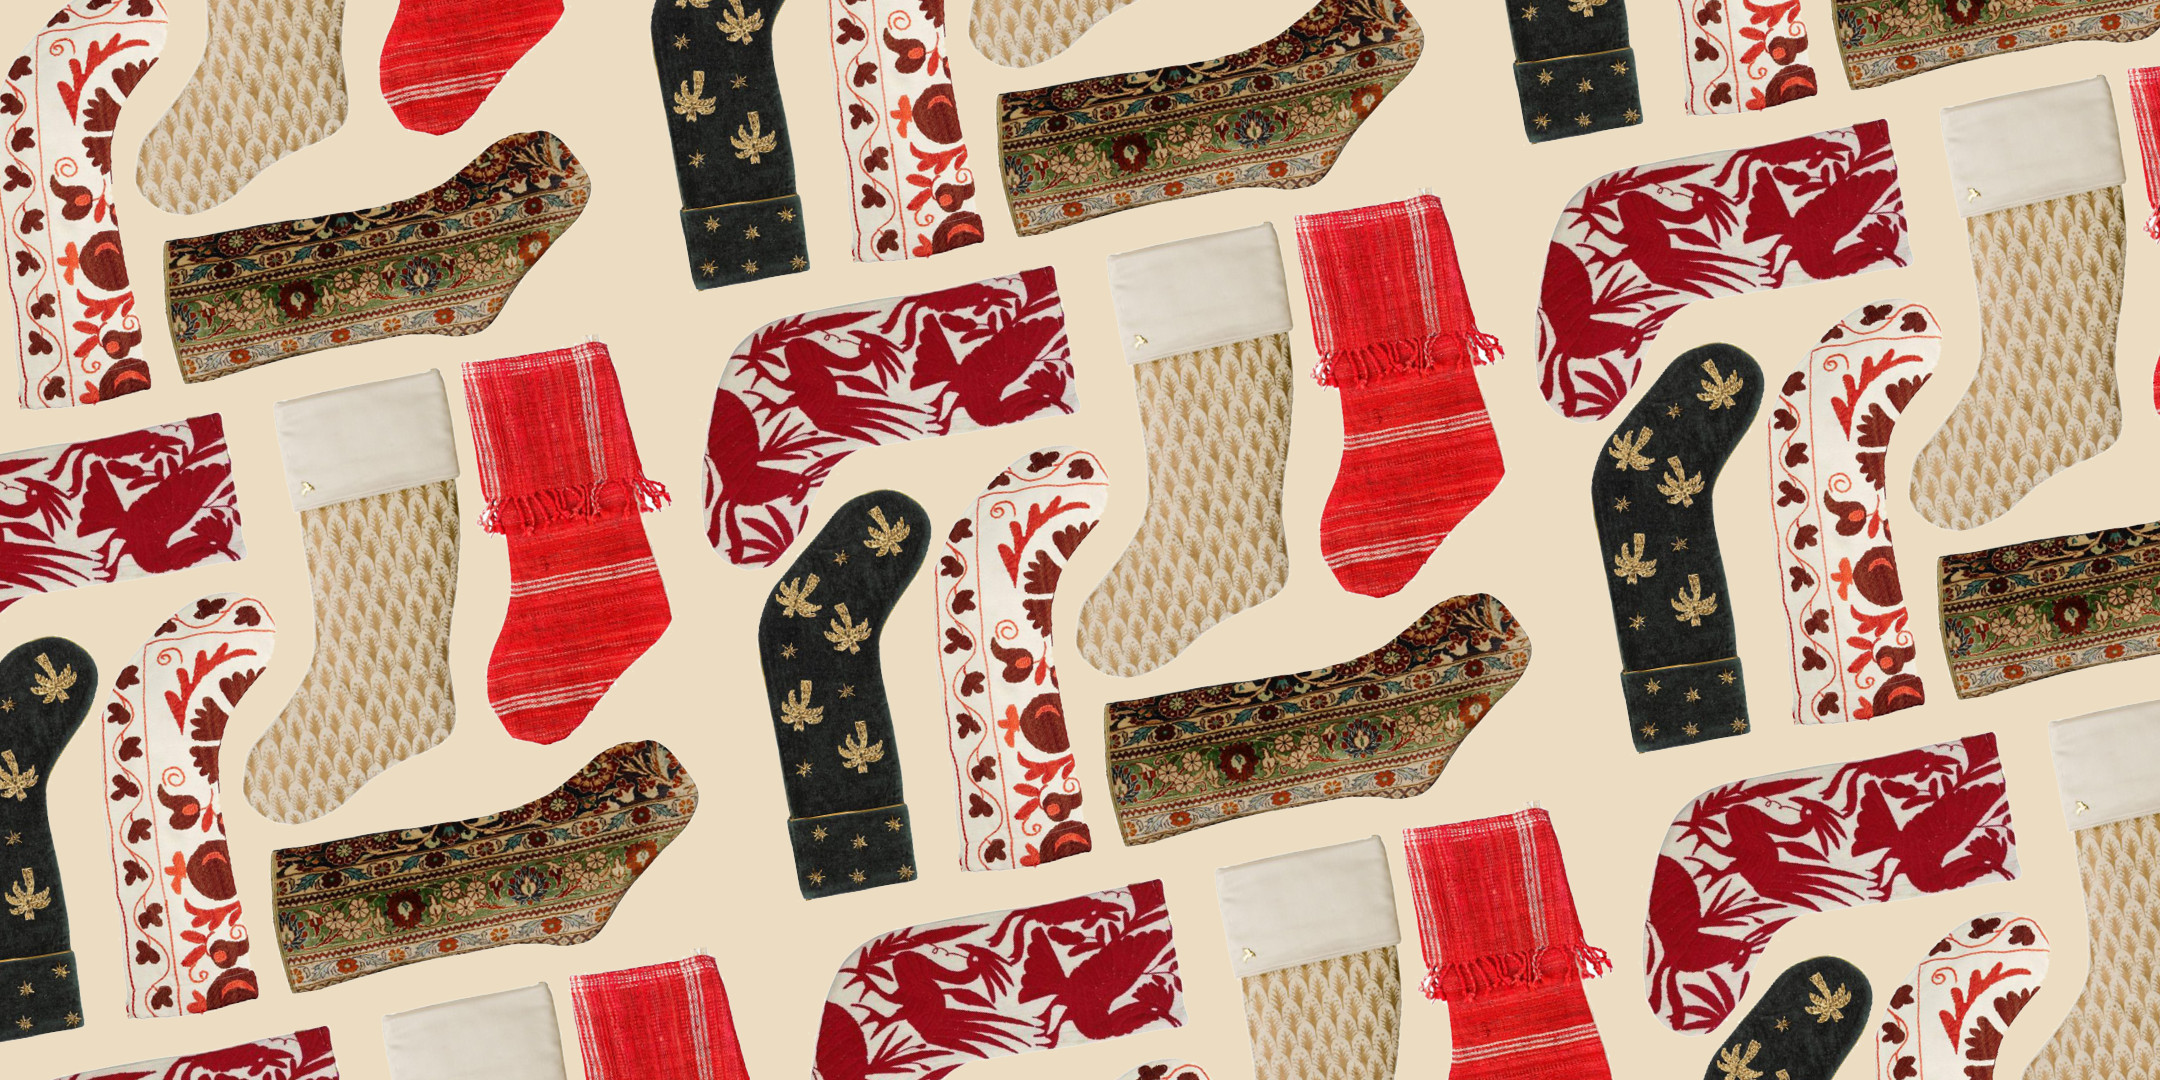 Merry Christmas Stockings Women Cotton Socks Letters Printed Hosiery Xmas Decor 